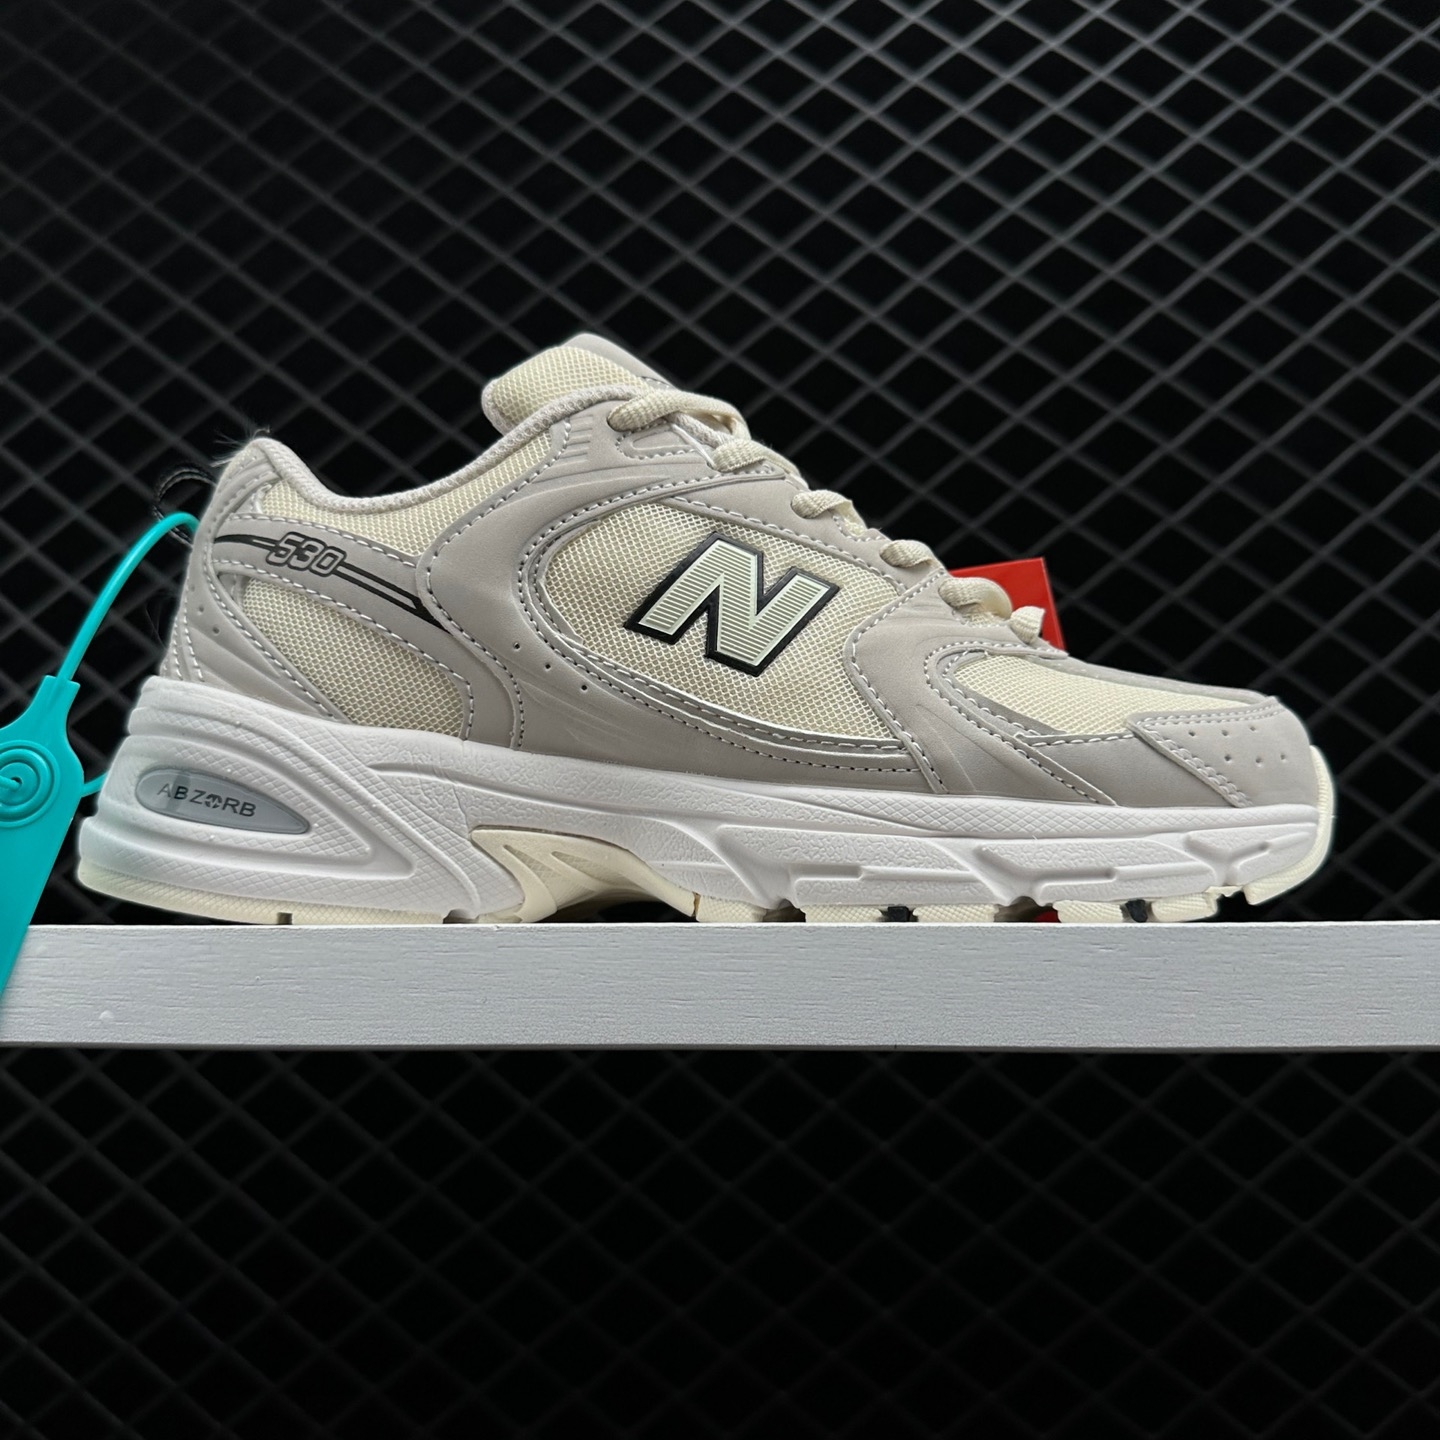 New Balance 530 Ivory - Stylish and Versatile Sneakers